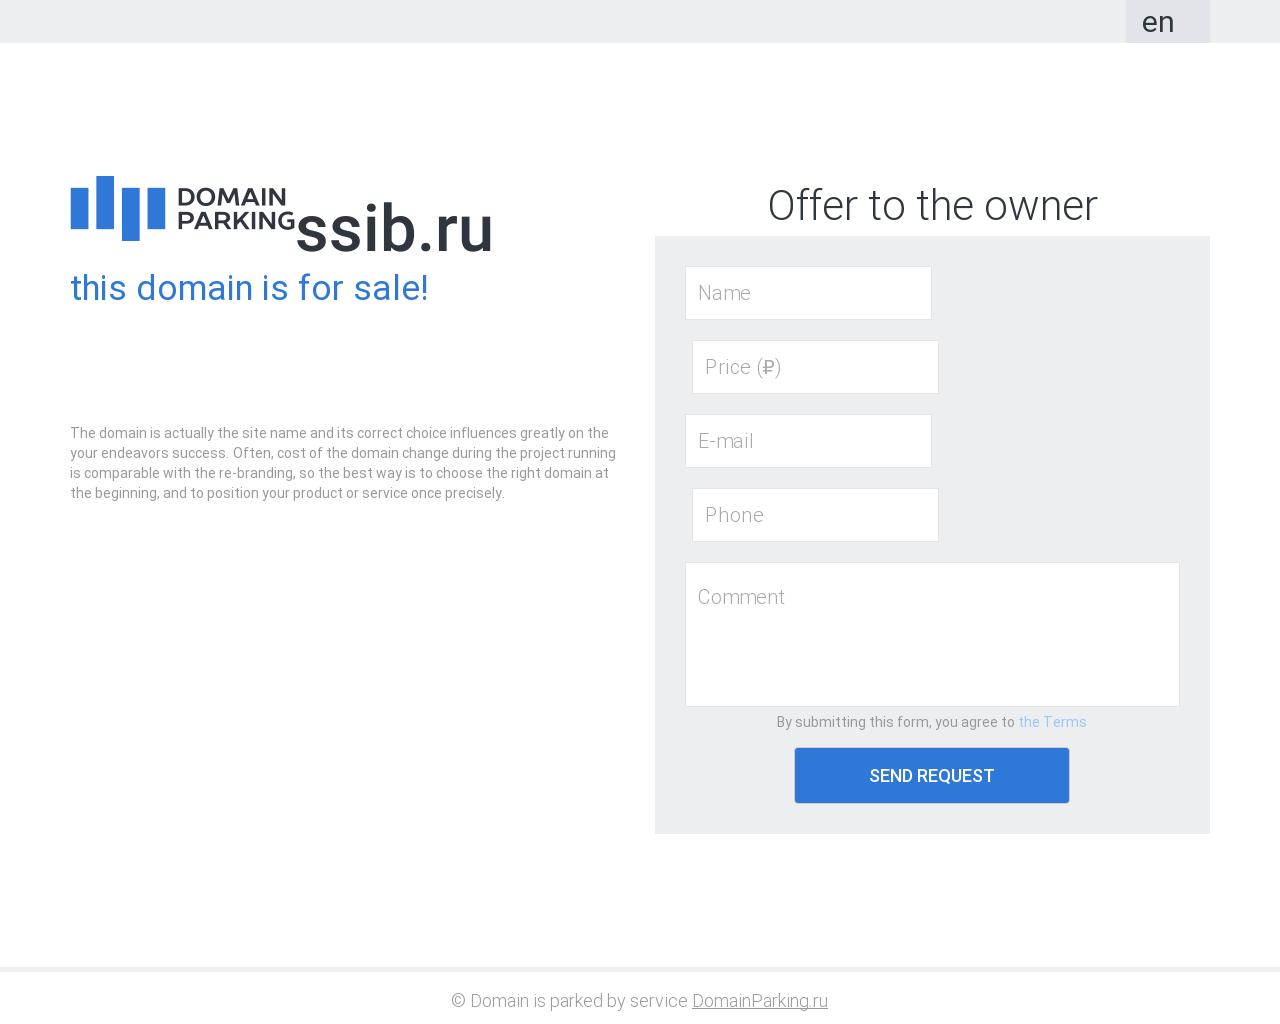 Изображение сайта ssib.ru в разрешении 1280x1024